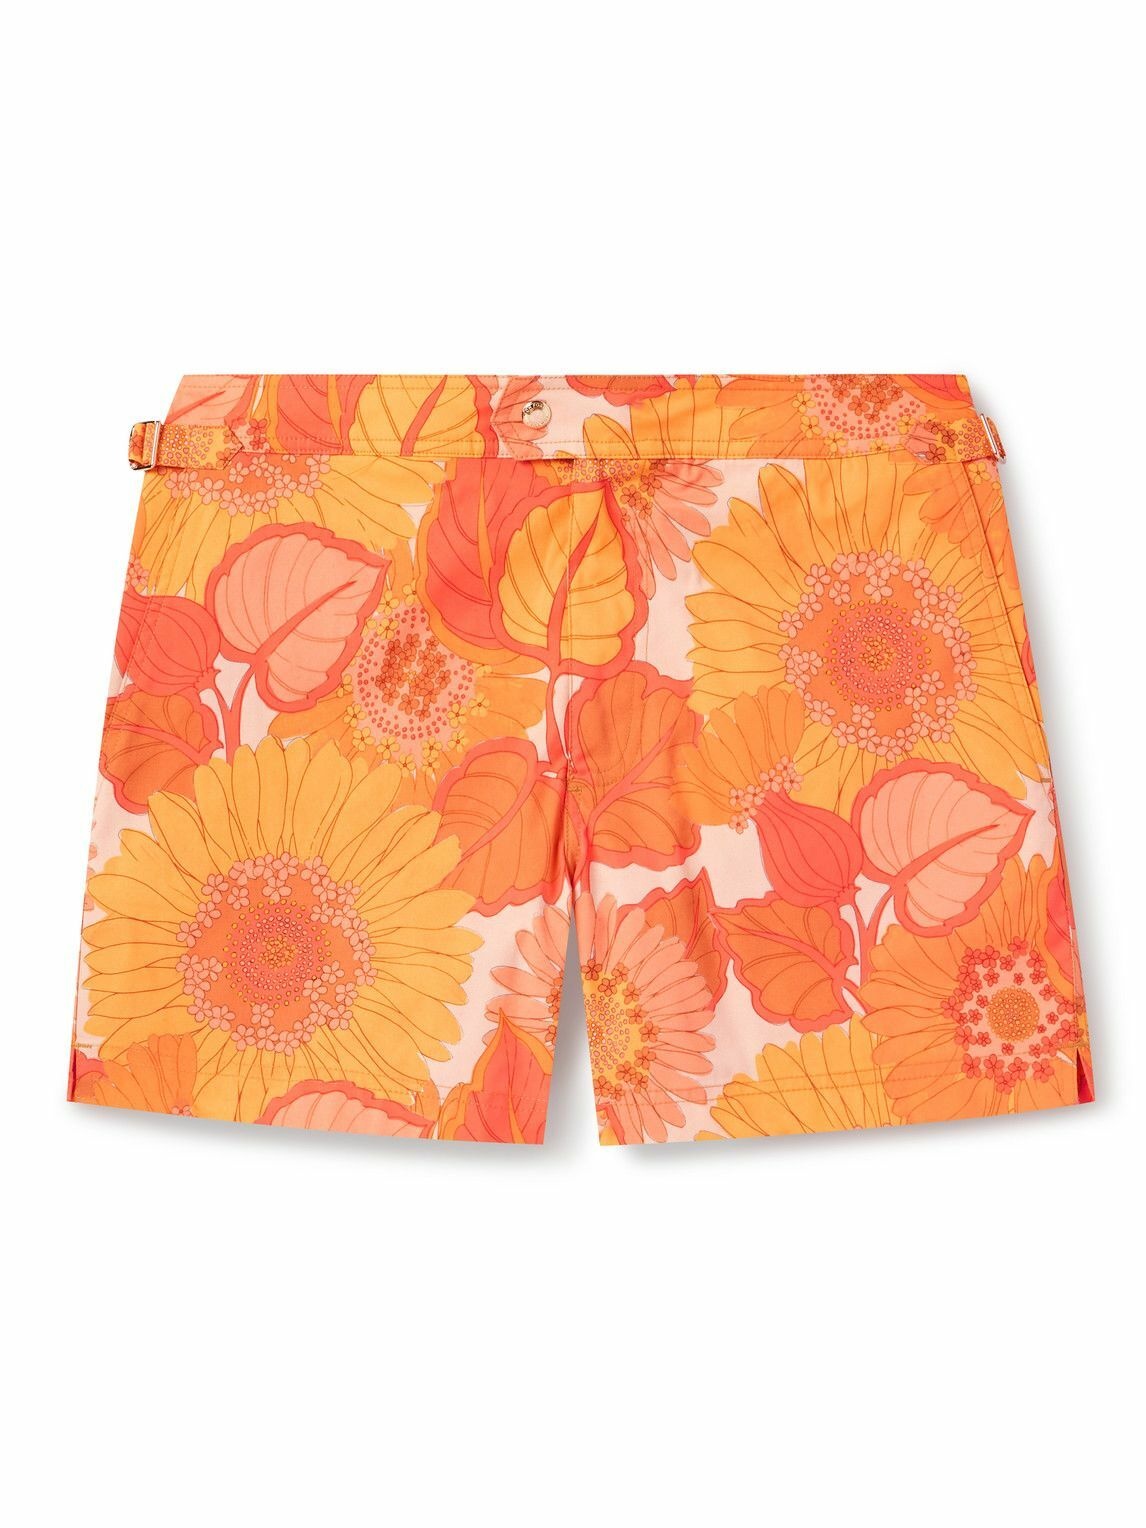 TOM FORD - Slim-Fit Short-Length Floral-Print Swim Shorts - Orange TOM FORD